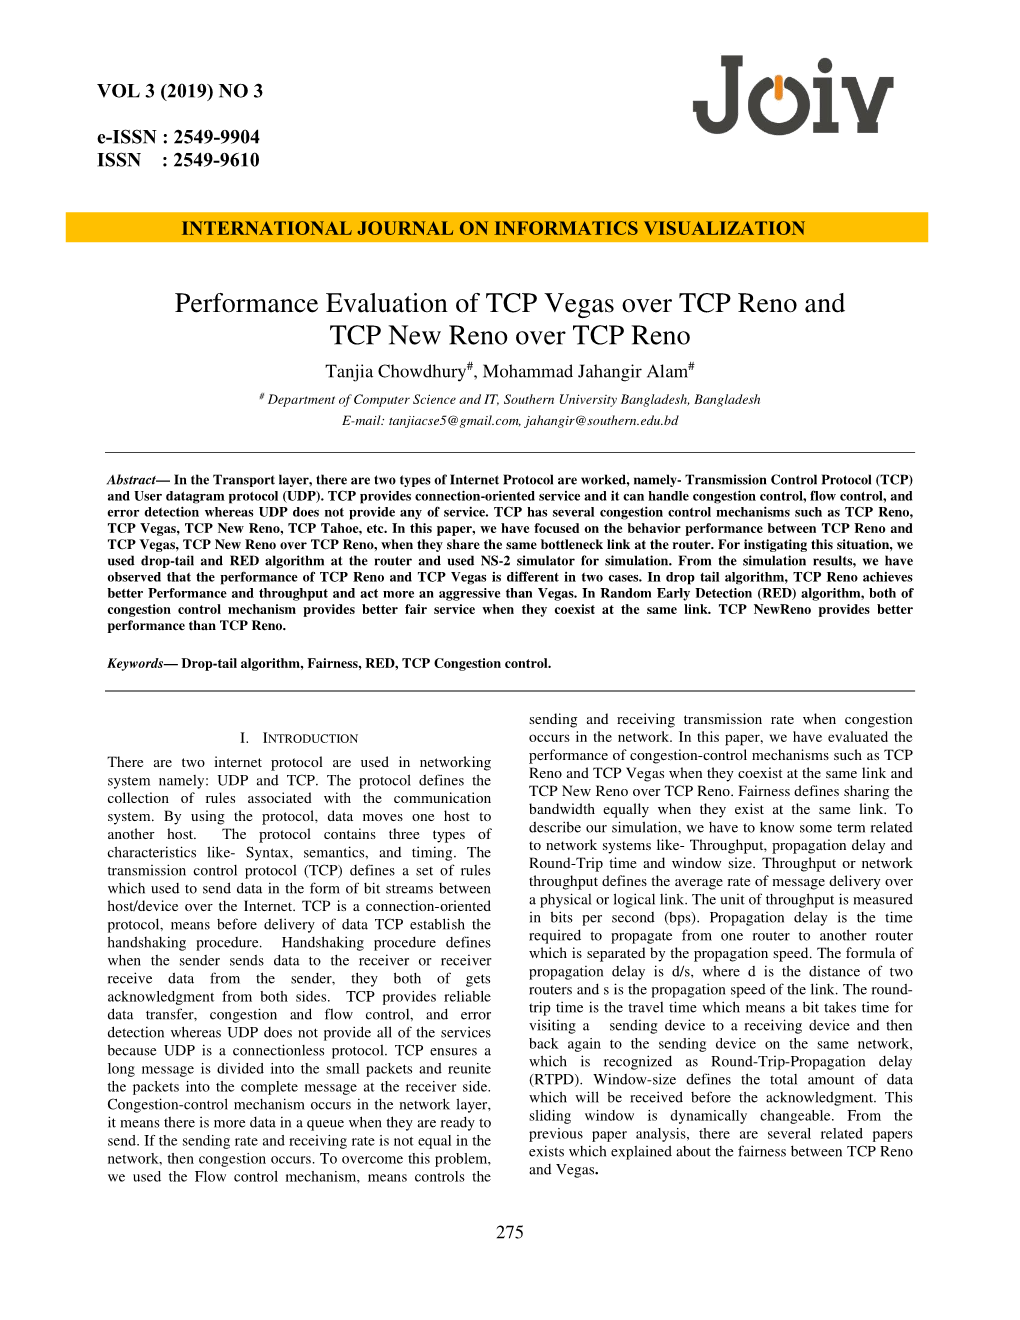 Performance Evaluation of TCP Vegas Over TCP Reno and TCP New Reno Over TCP Reno